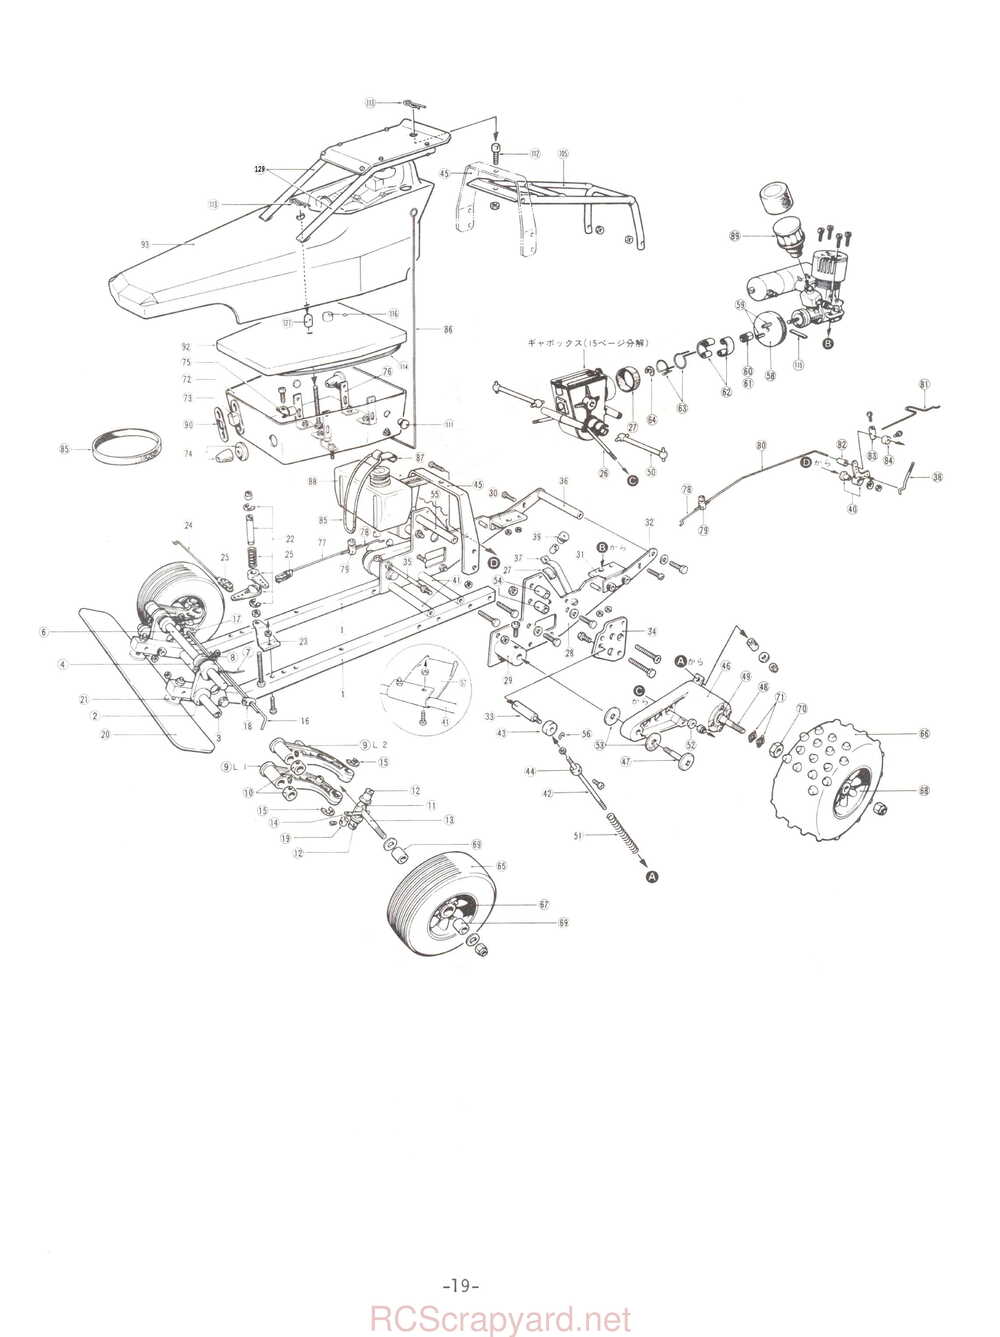 Kyosho - 3045 - Circuit-20-Extra - Racing-Baja - Manual - Page 19